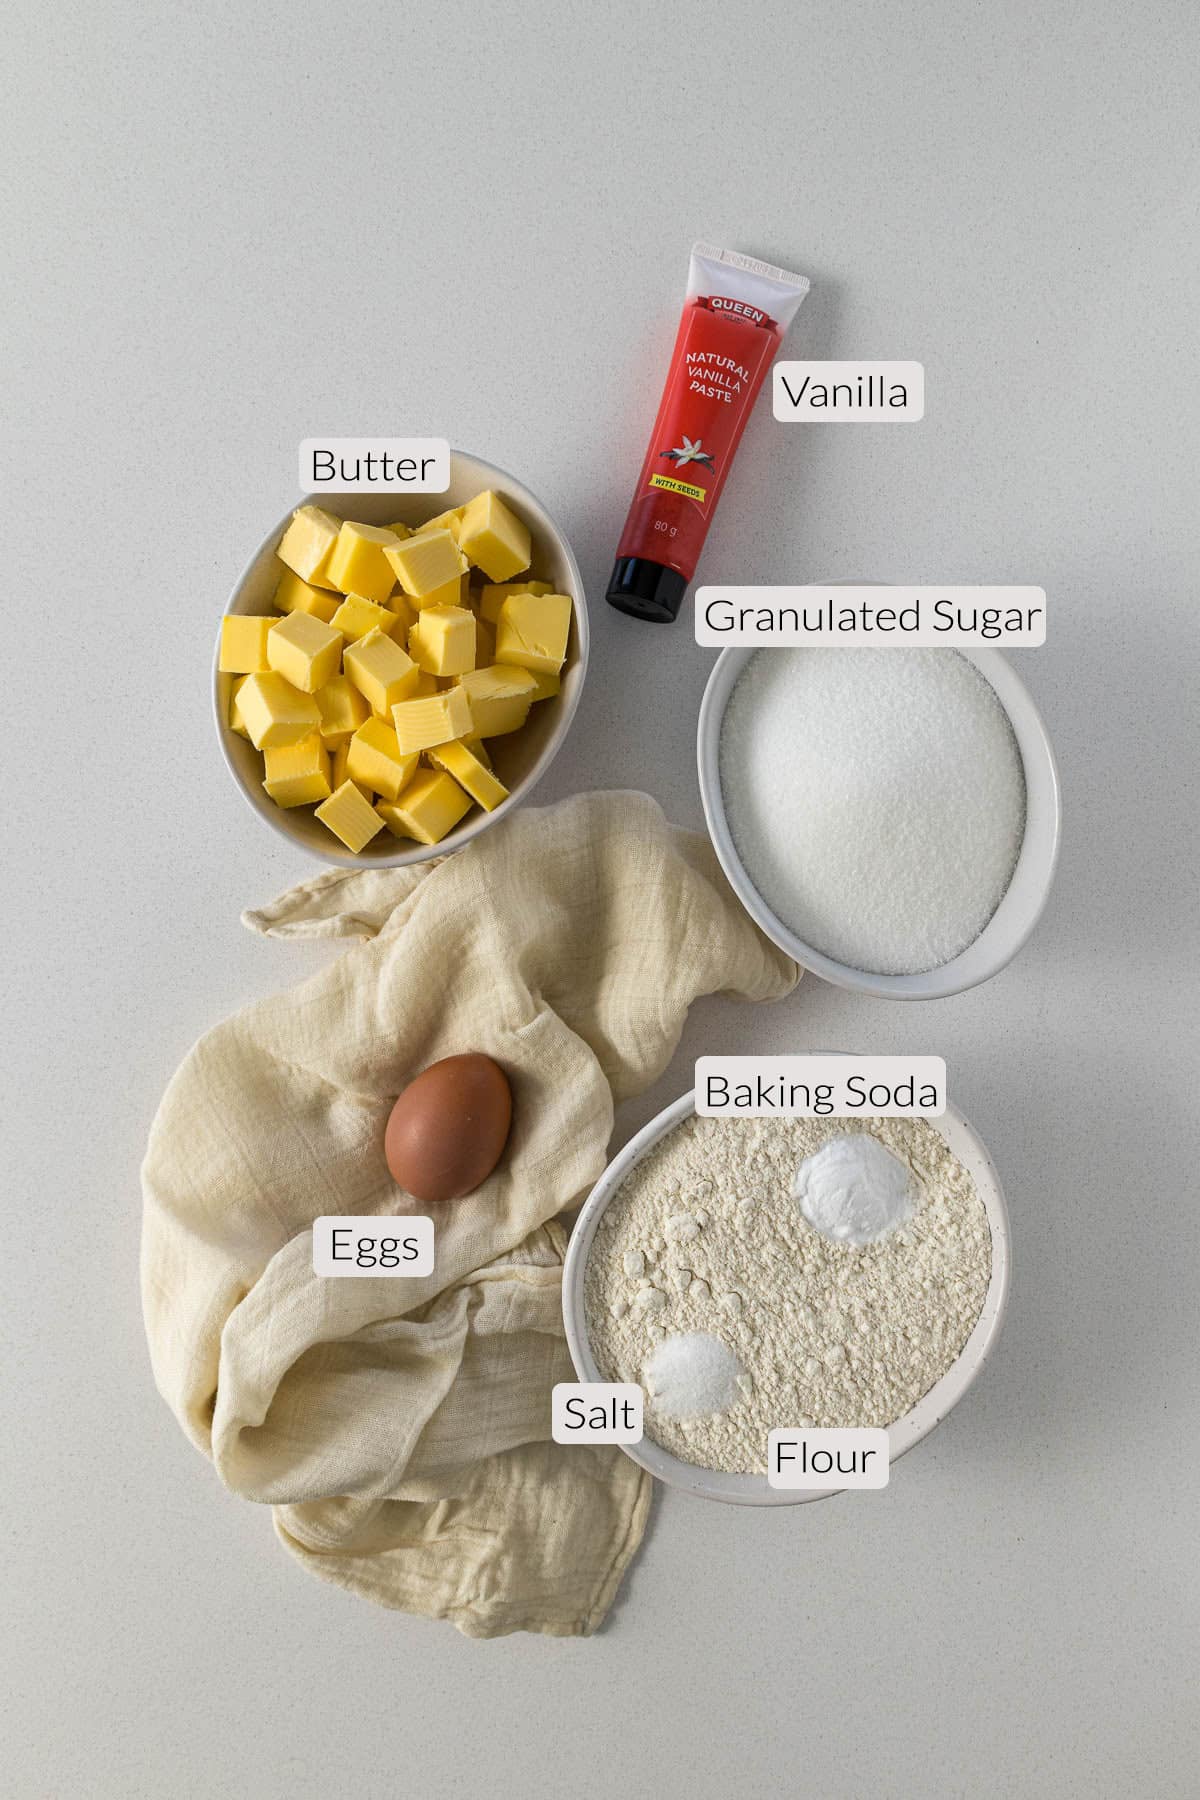 Vanilla sugar cookies ingredients - butter, vanilla, sugar, egg, flour, baking soda, and salt.